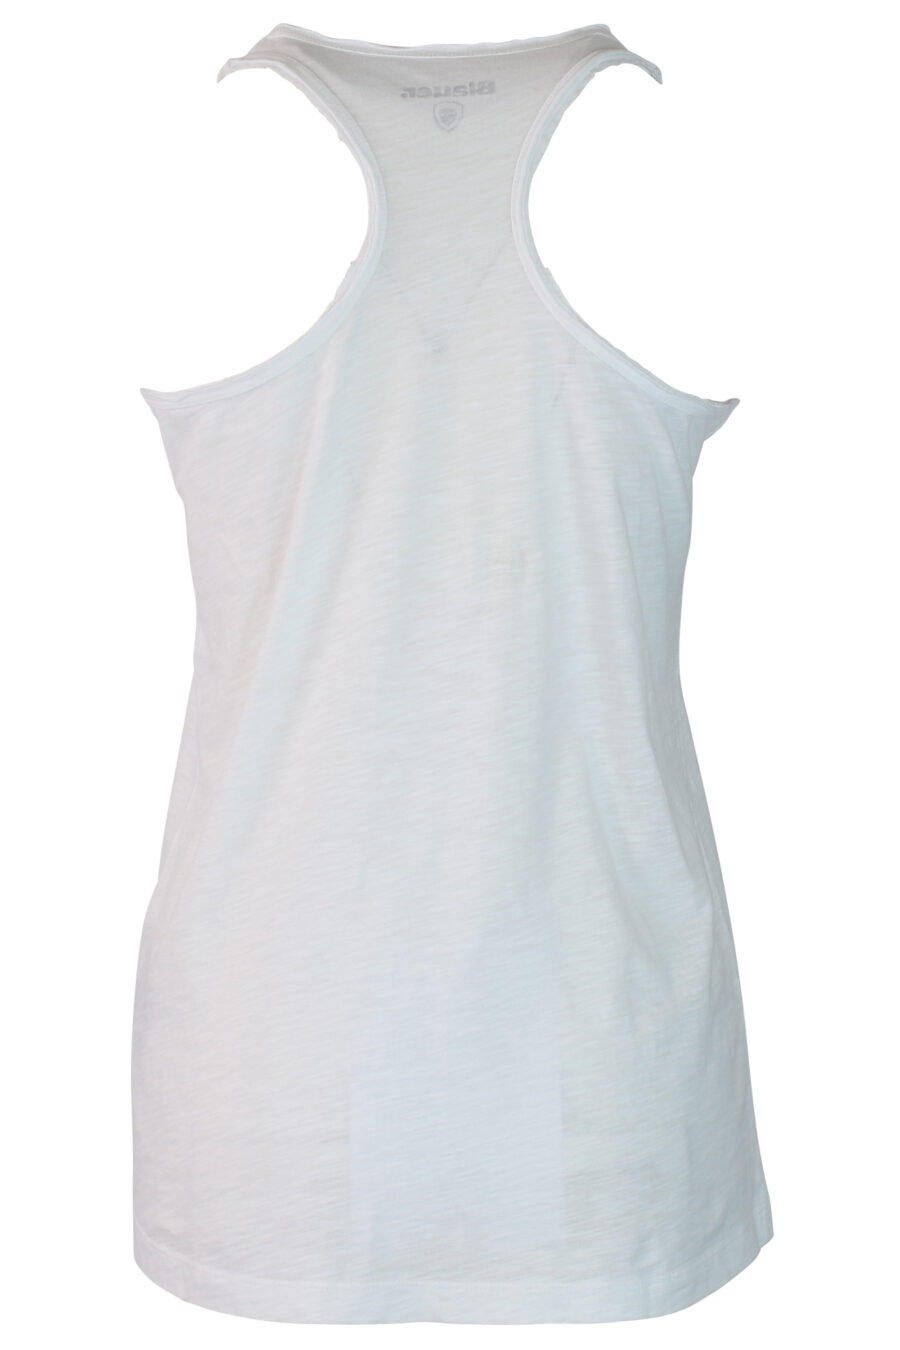 Weißes ärmelloses T-Shirt mit silbernem Maxilogo - IMG 0373